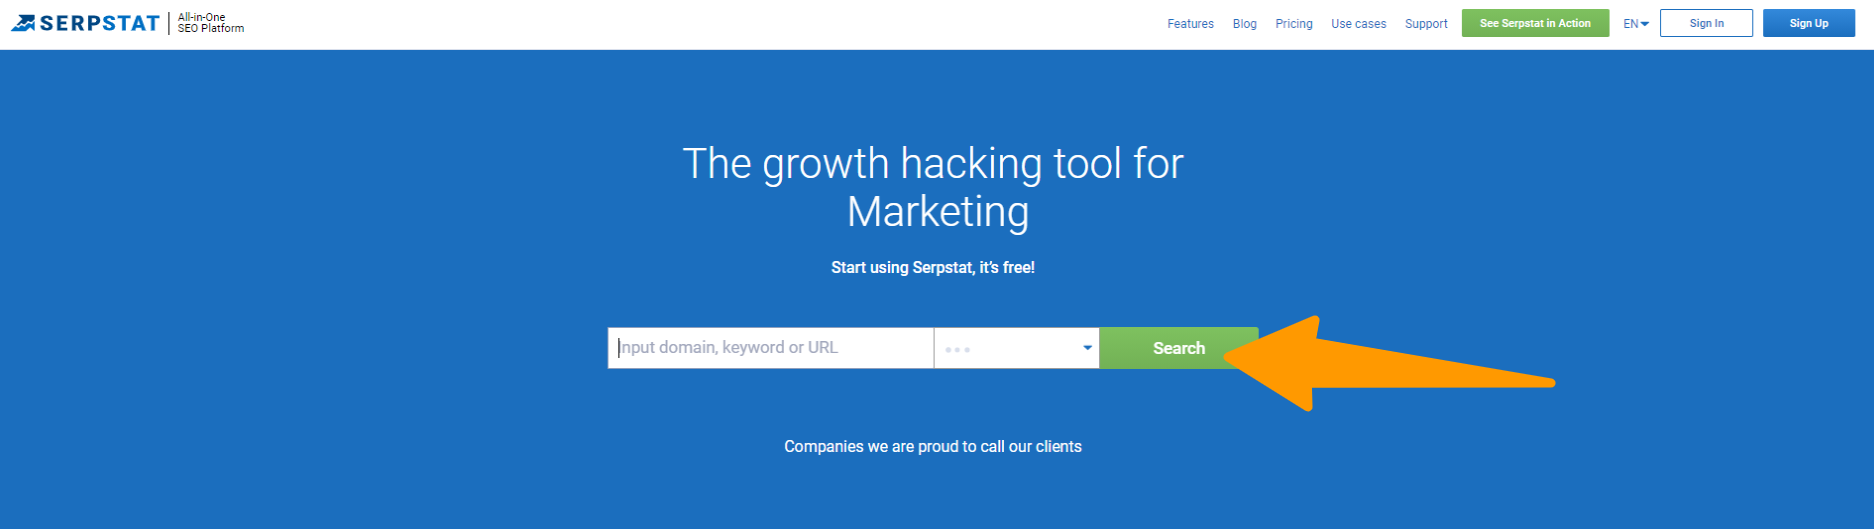 Serpstat-—-Growth-hacking-tool-